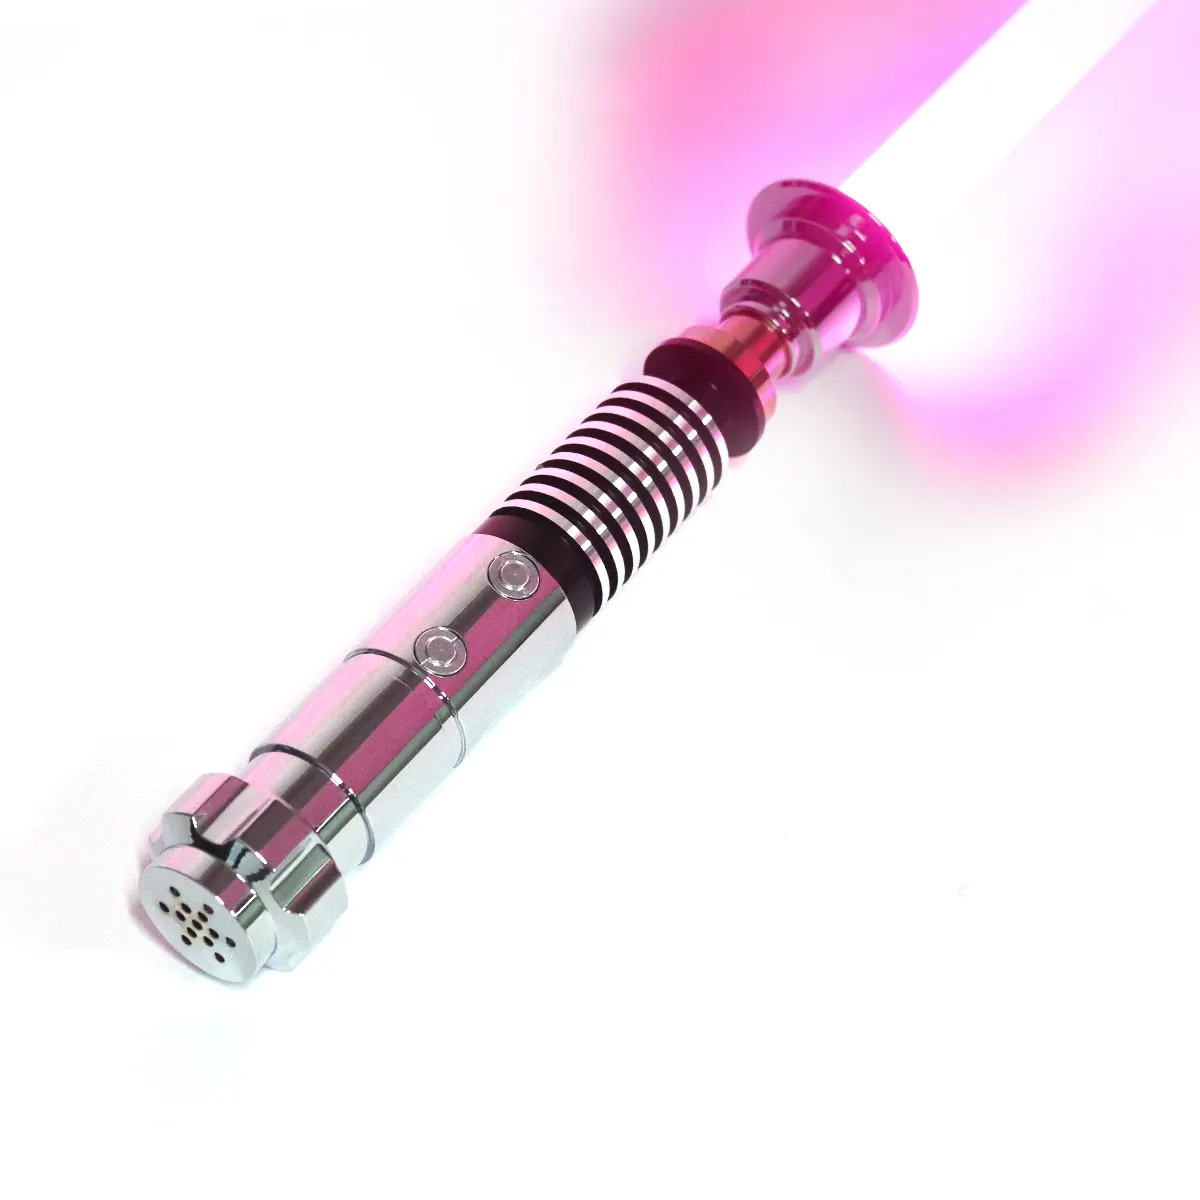 Lgt Saberstudio Luke lightsaber special material infinite color sensitive rechargeable laser sword for cosplay entertainment